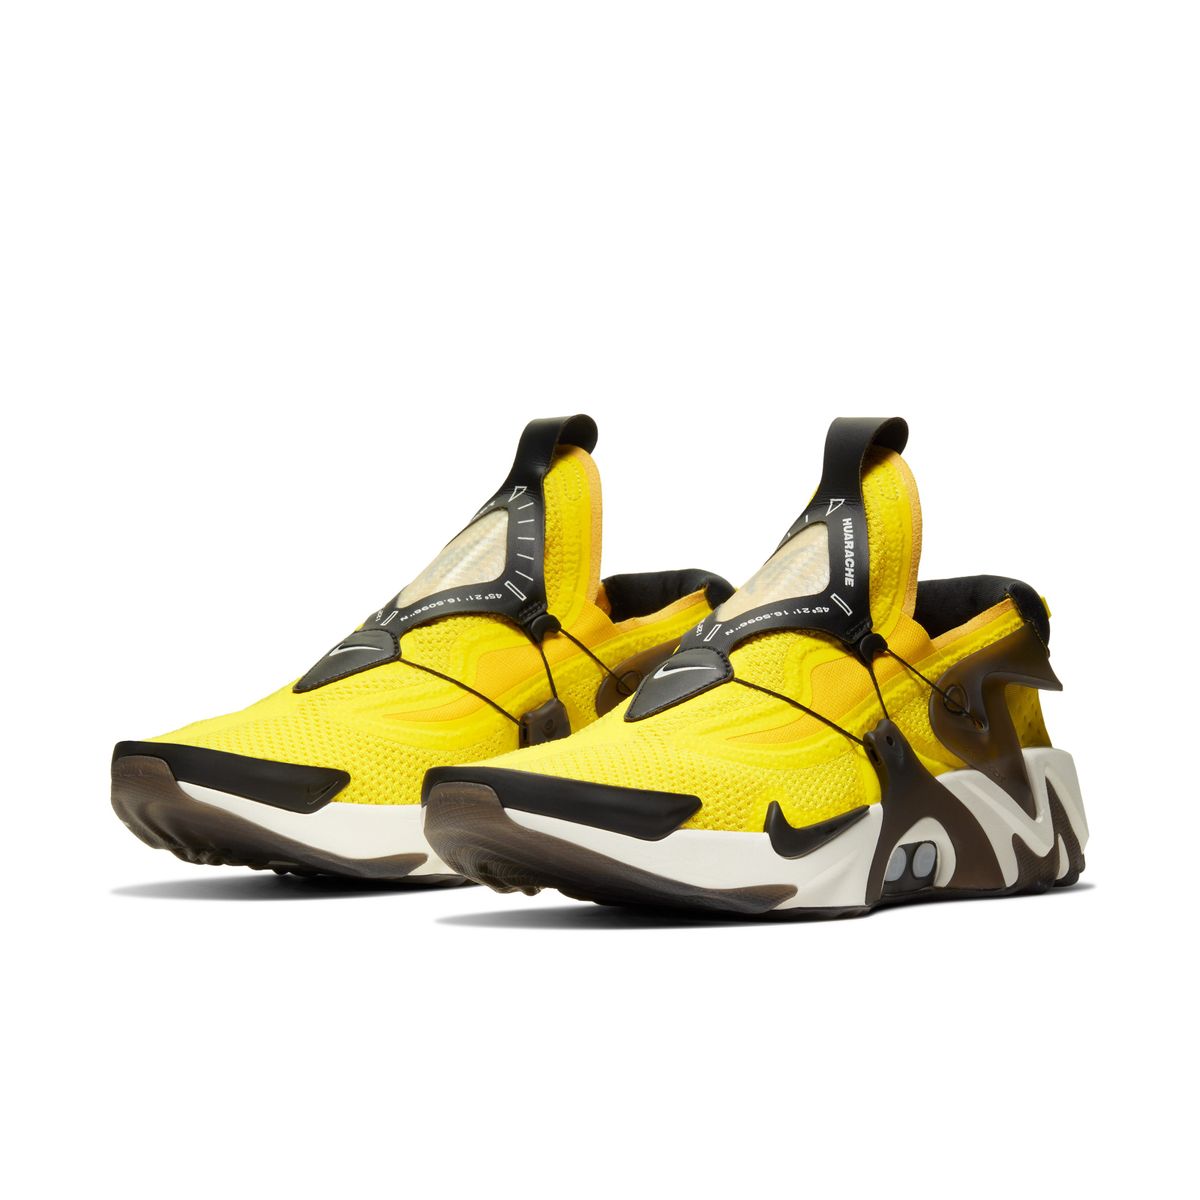 Nike – Adapt Huarache Yellow - Sneakers - Yellow - Image 2